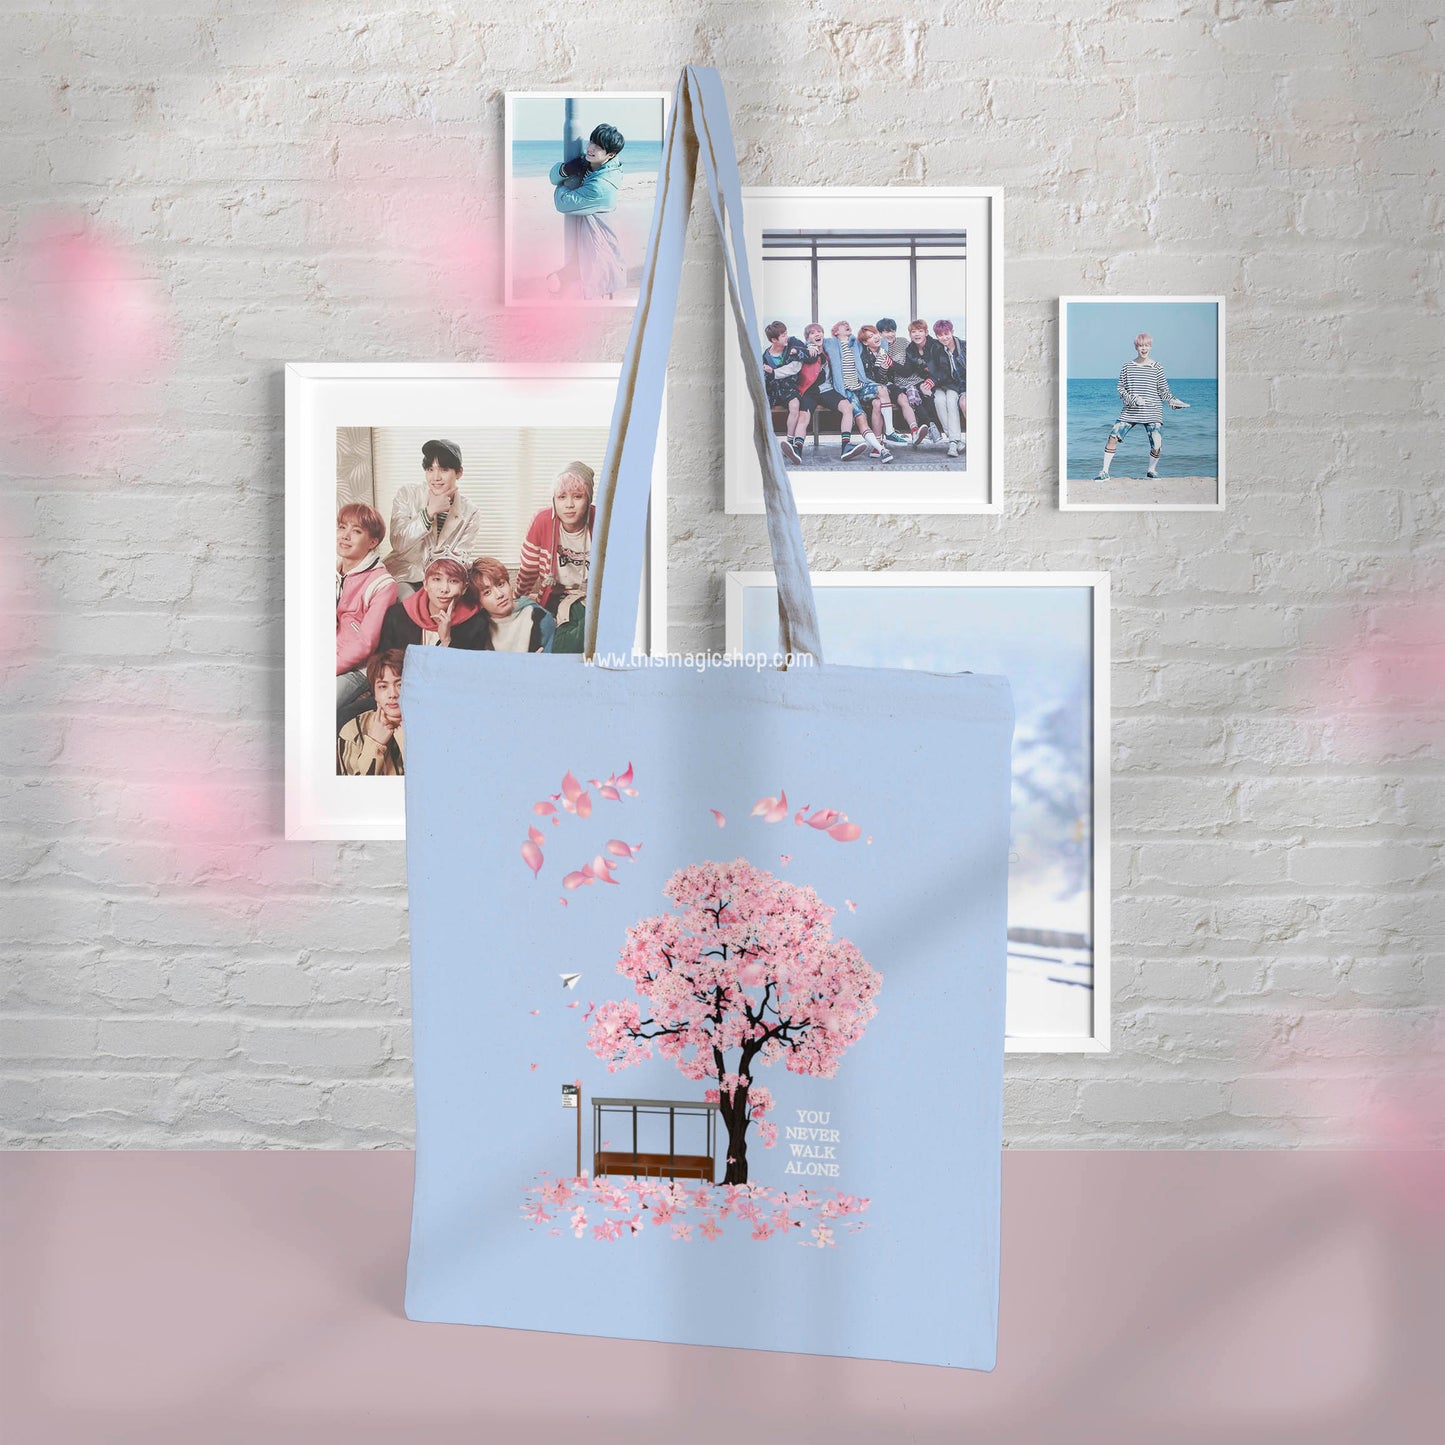 BTS Spring Day Tote Bag